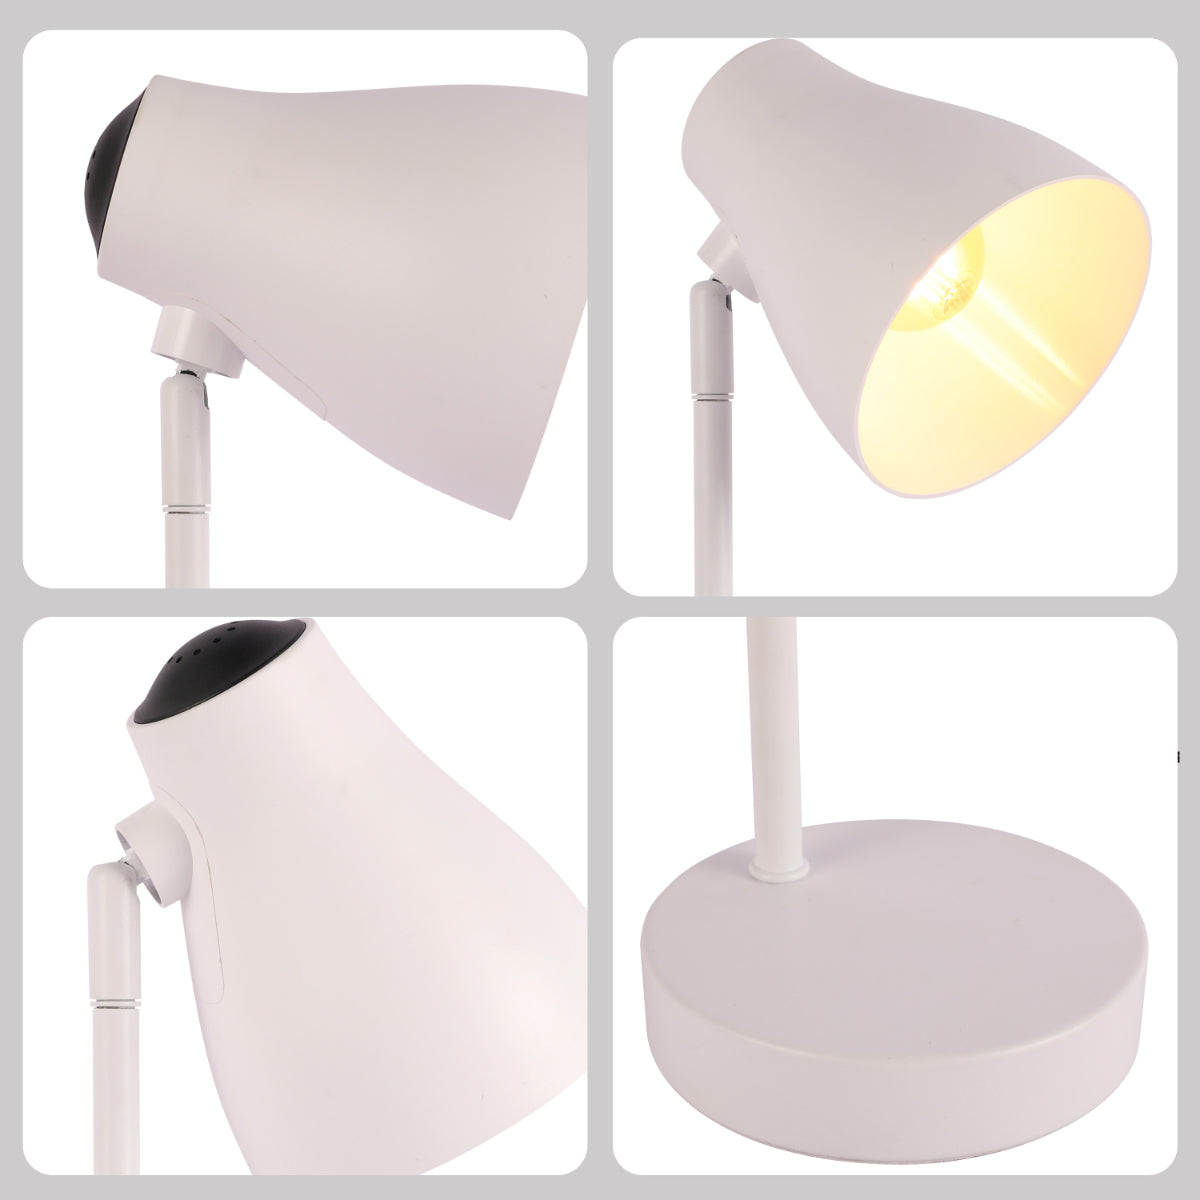 Lighting properties of Elegant Rotatable Desk Lamp in Assorted Colors 130-03652